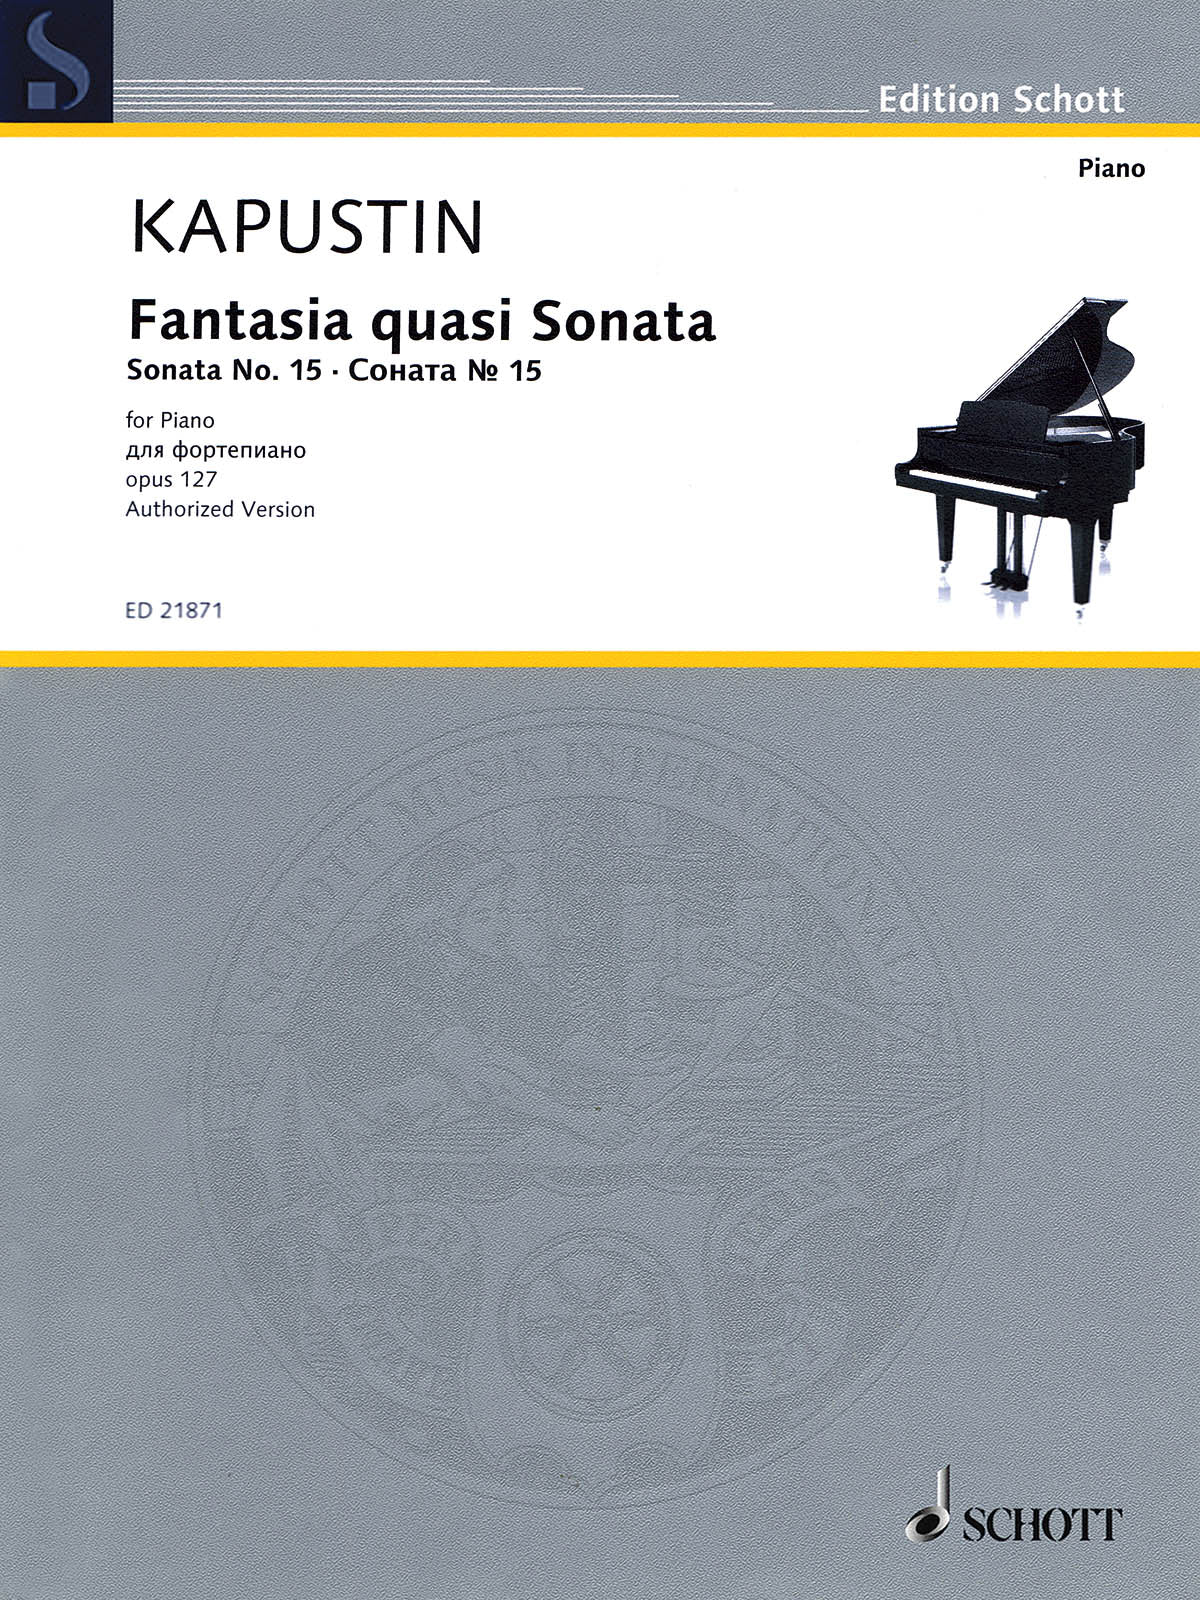 Kapustin: Fantasia quasi Sonata, Op. 127